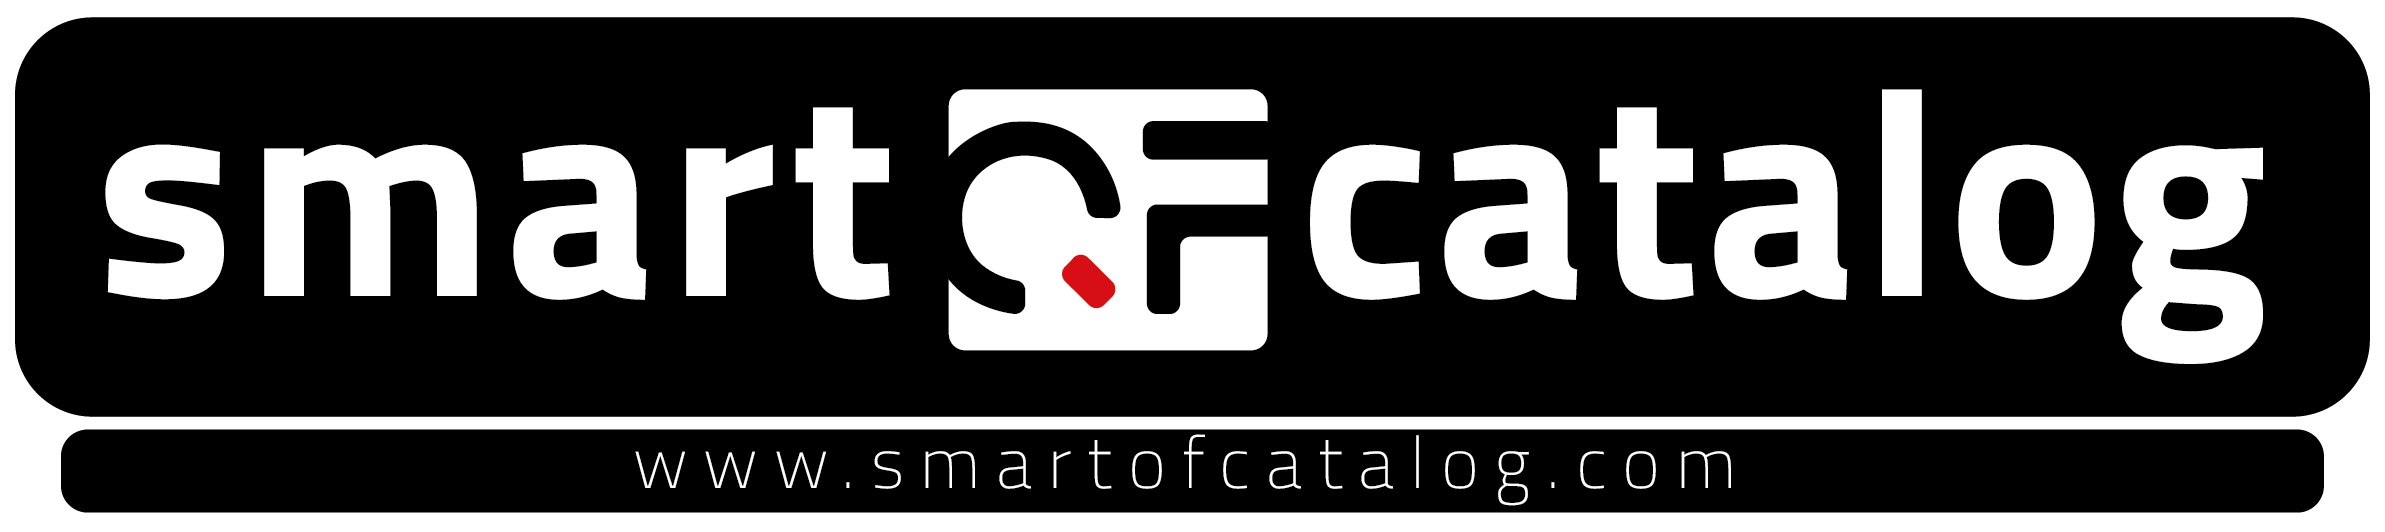 Smart Of Catalog_logo